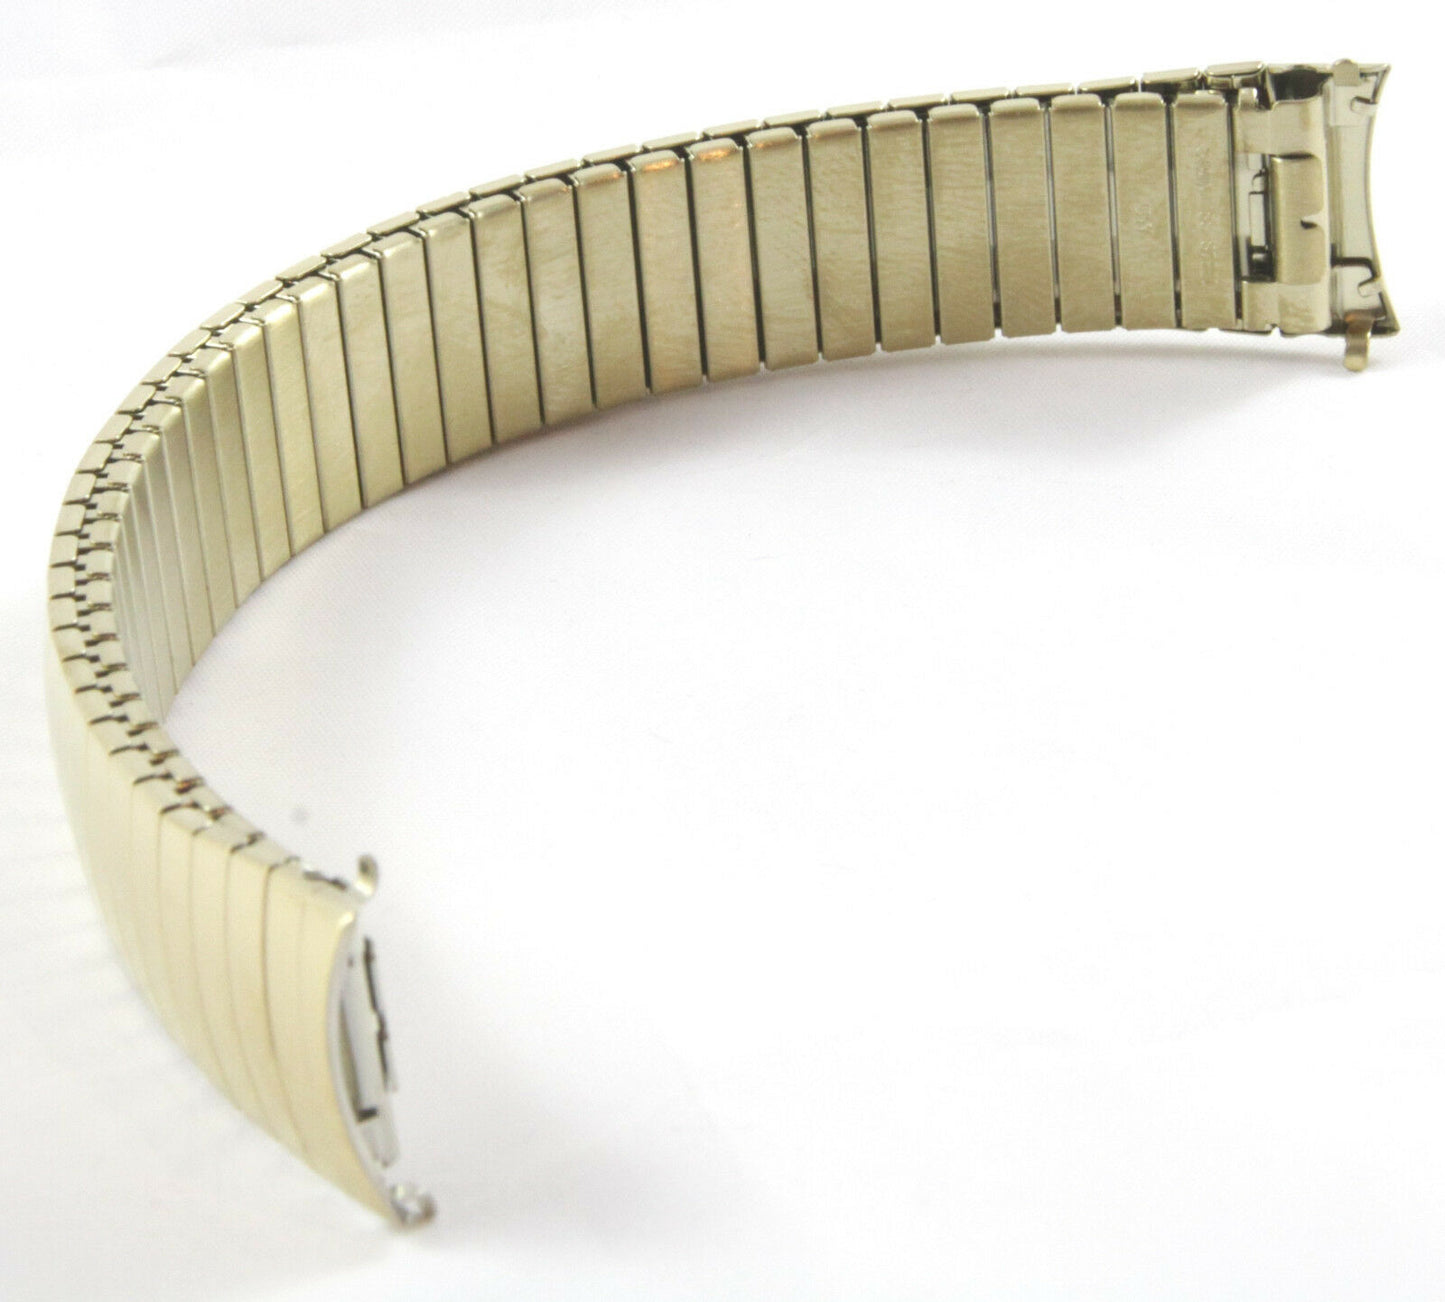 Timex Ersatzarmband T20471 Flexband Strechband Ersatzband 18mm - T2H301 & T20481